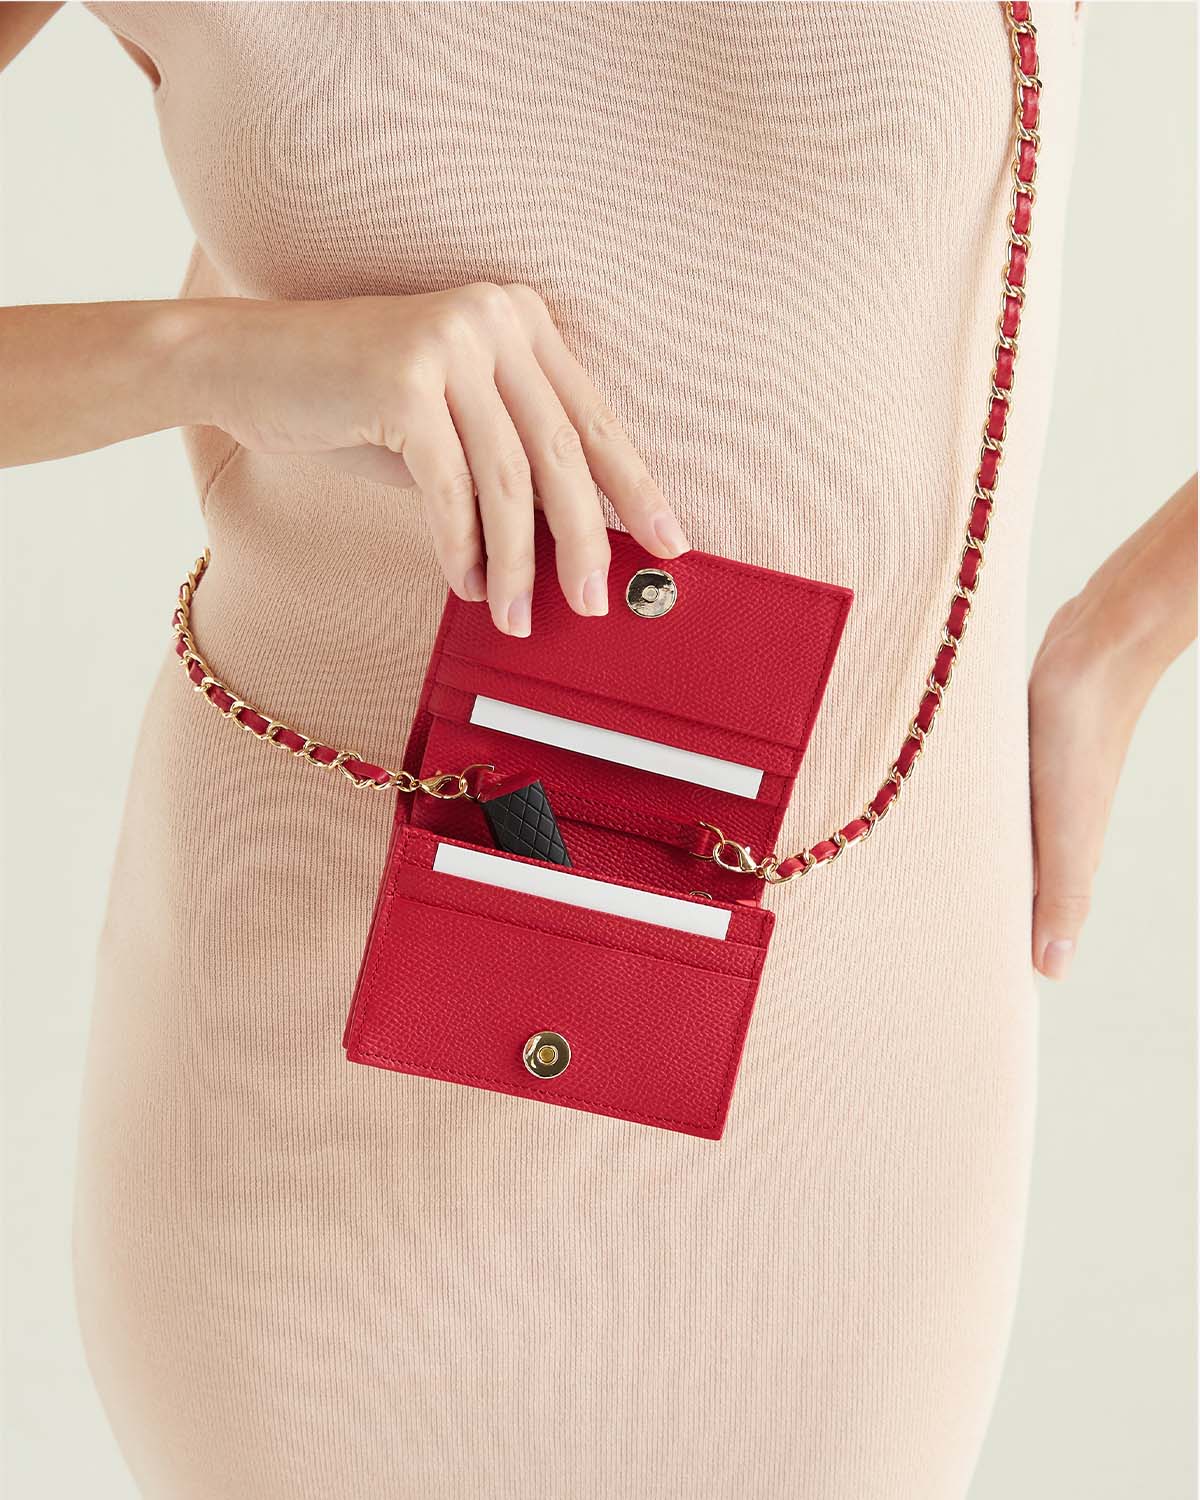 VERA Emily Flap Wallet with Leather Braided Gold Chain in Passionate Red กระเป๋าสตางค์หนังแท้ แบบเปิดฝา พร้อมสายโซ่สีทองร้อยหนัง สีแดง